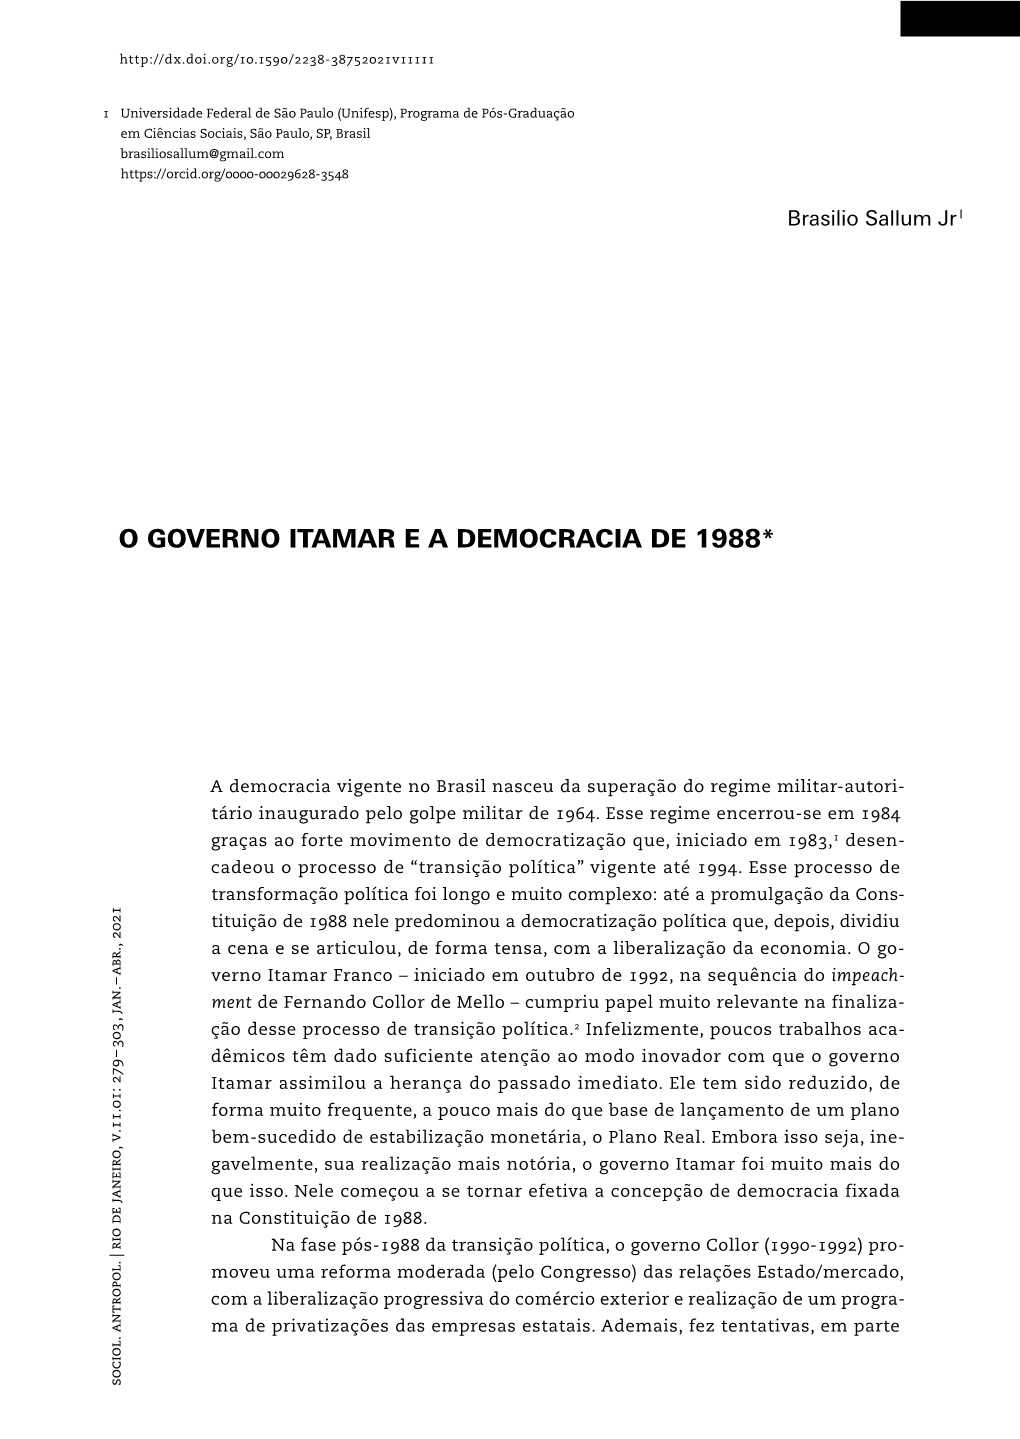 O Governo Itamar E a Democracia De 1988 *